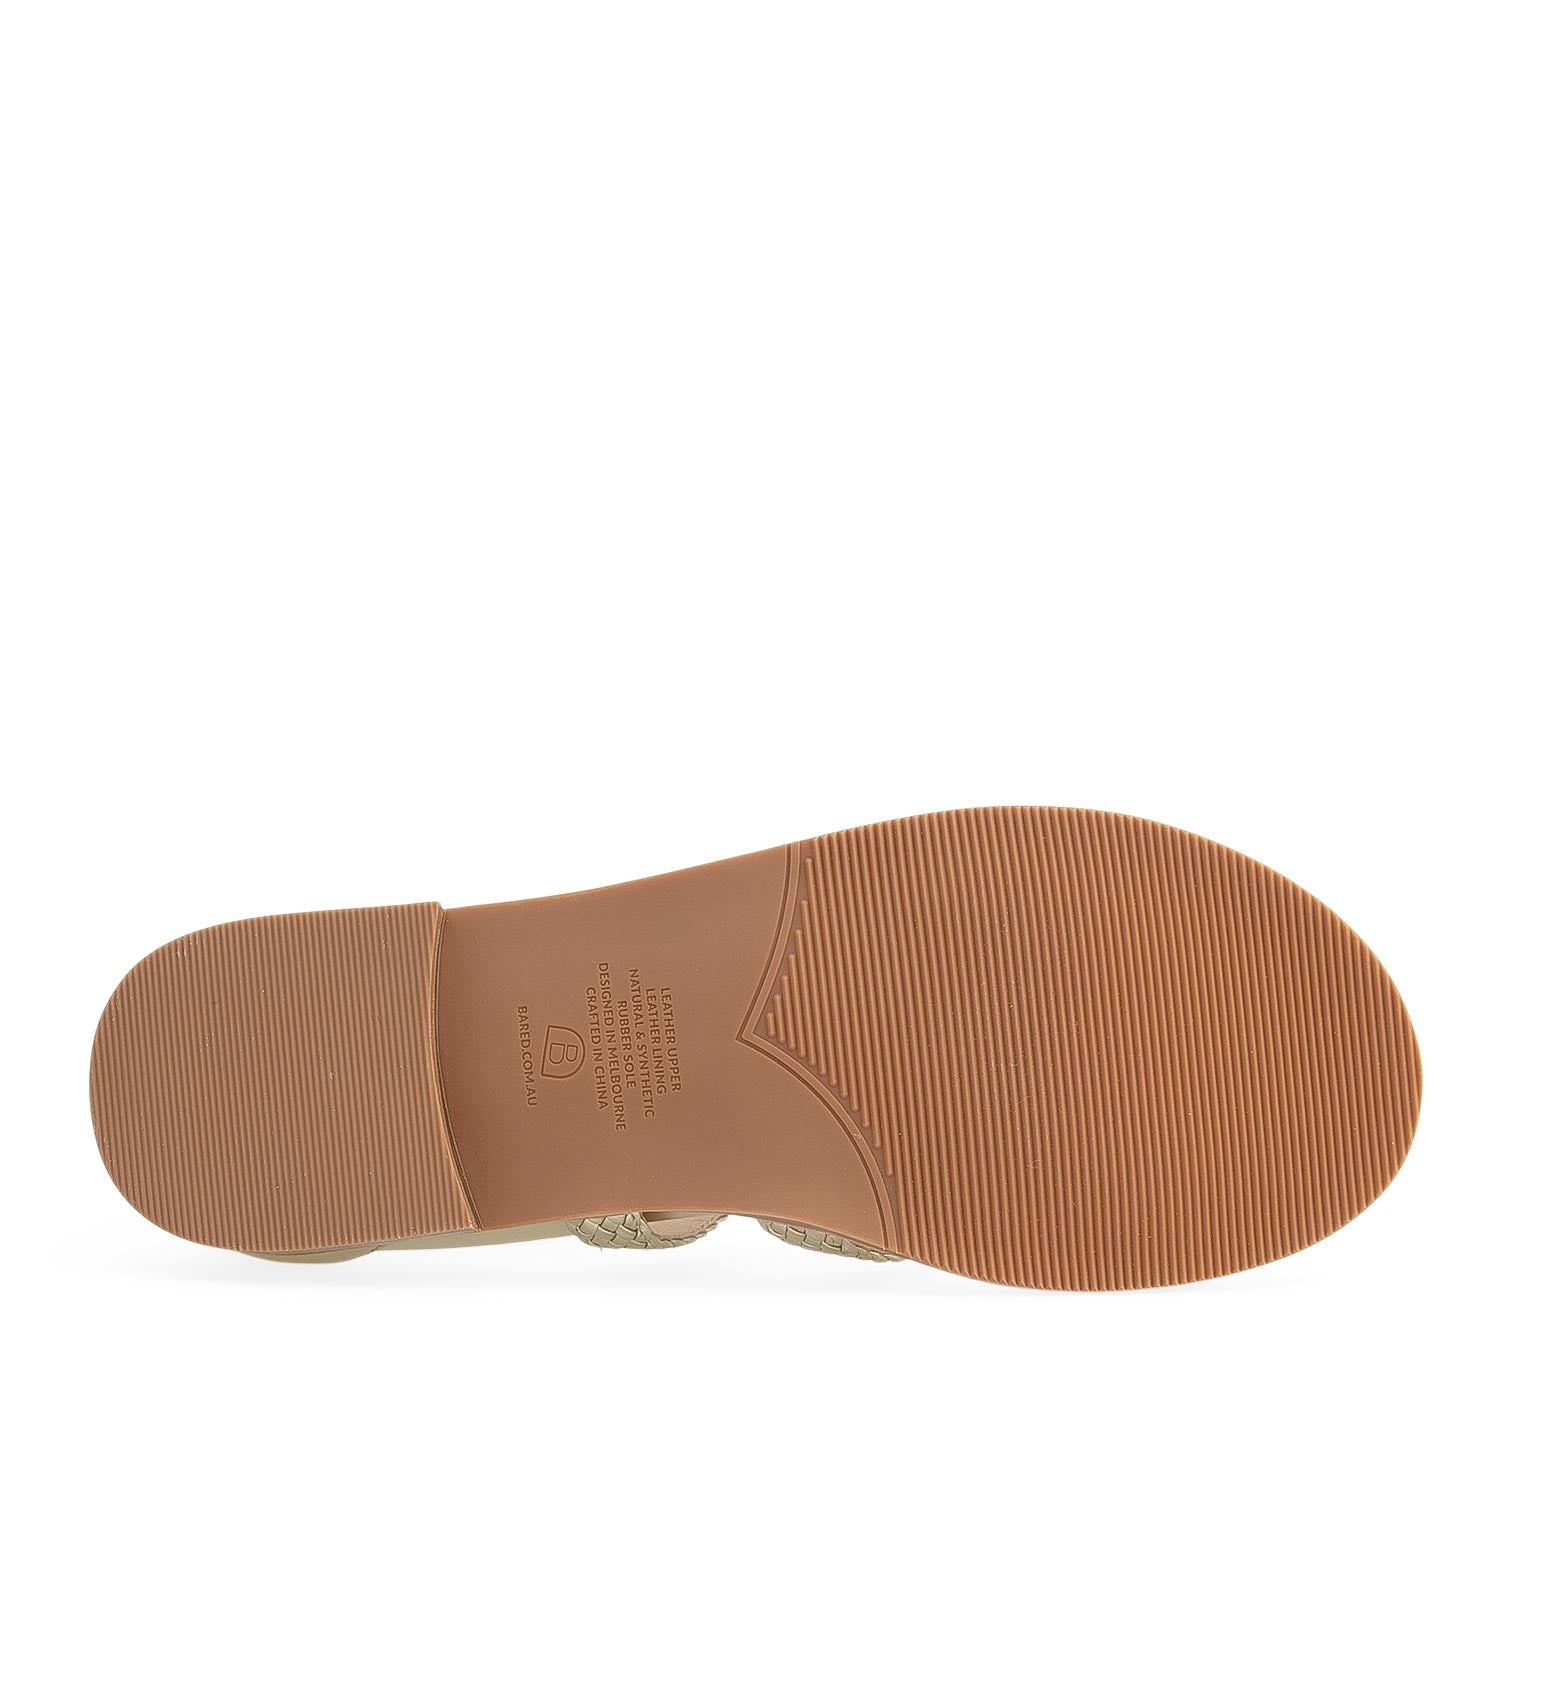 Murrelet Gold Leather Flat Sandals | Bared Footwear